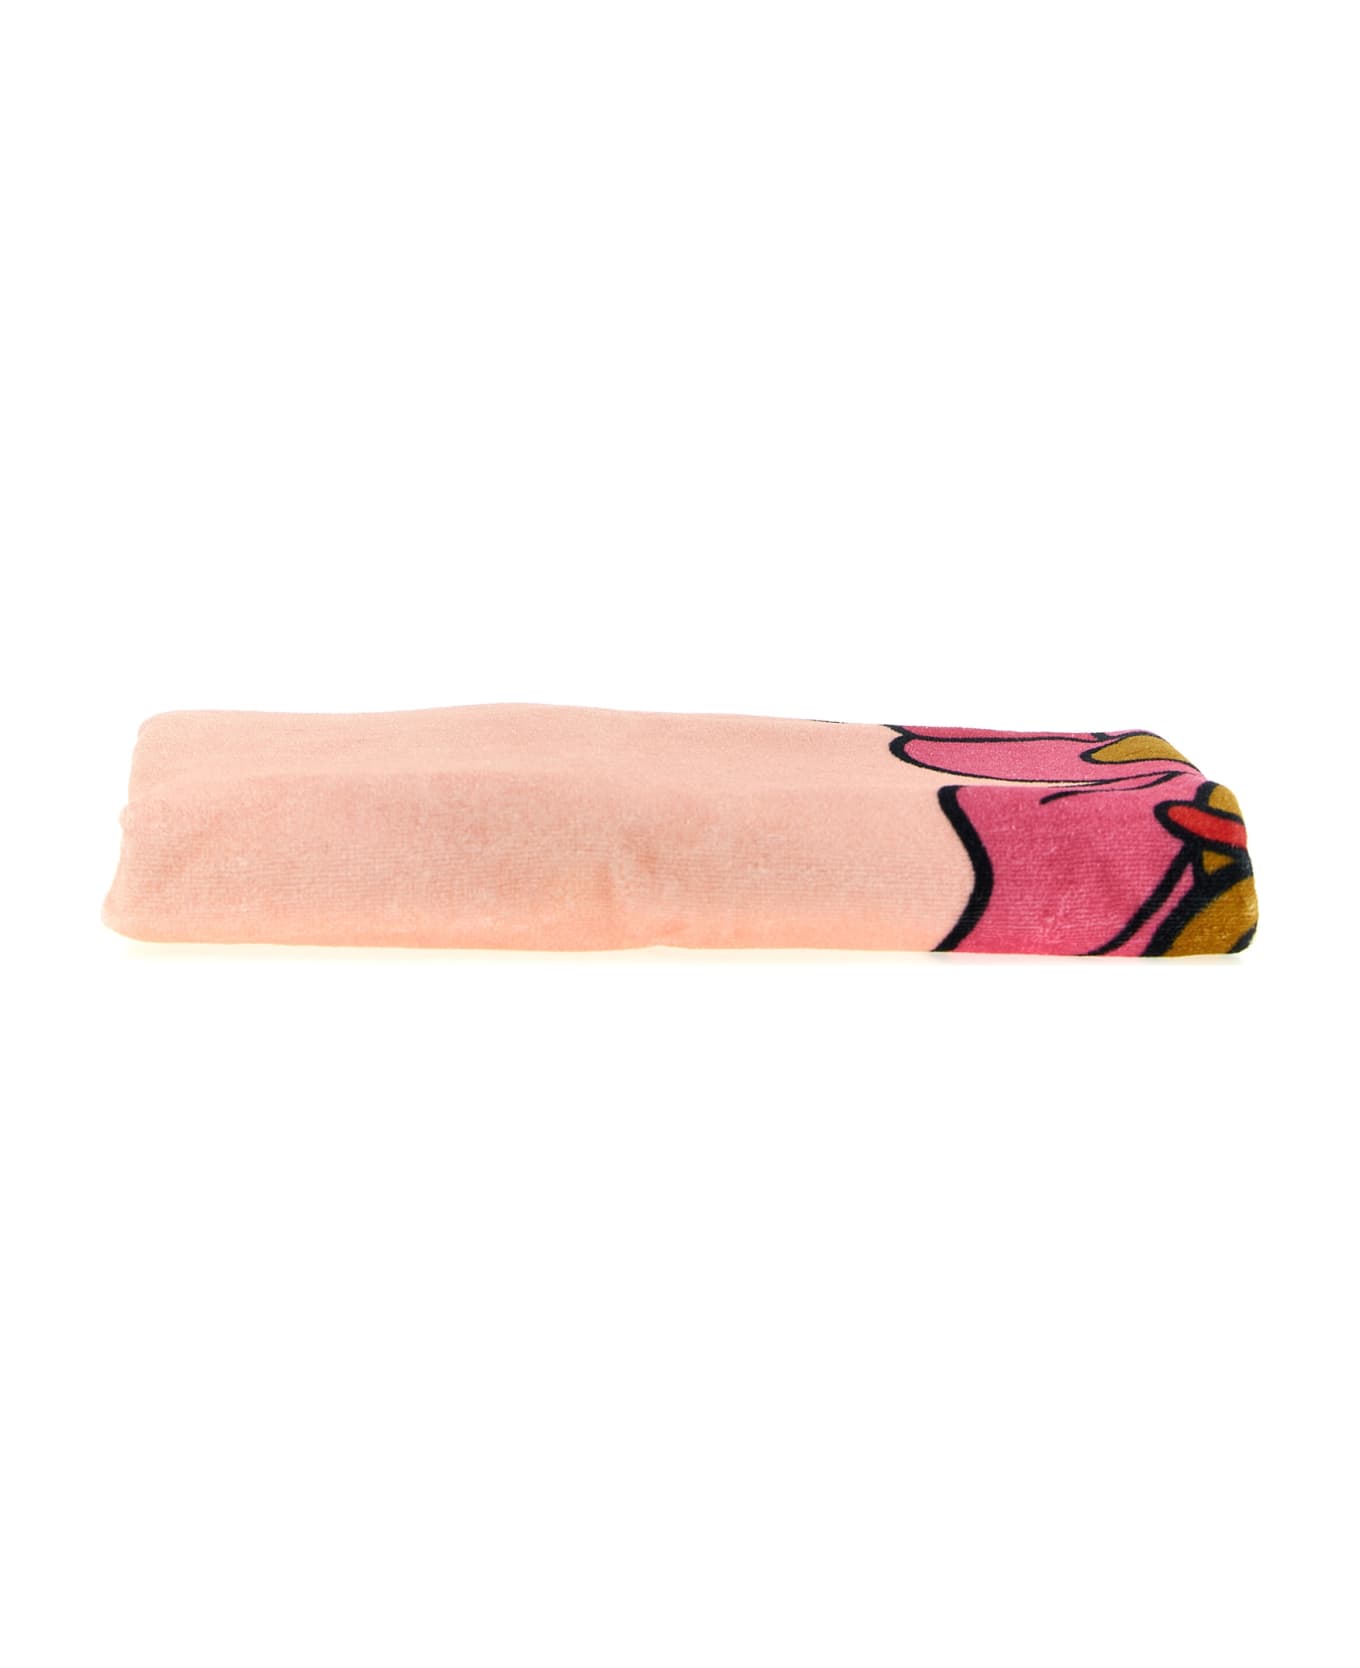 Moschino Beach Towel 'teddy' - Pink